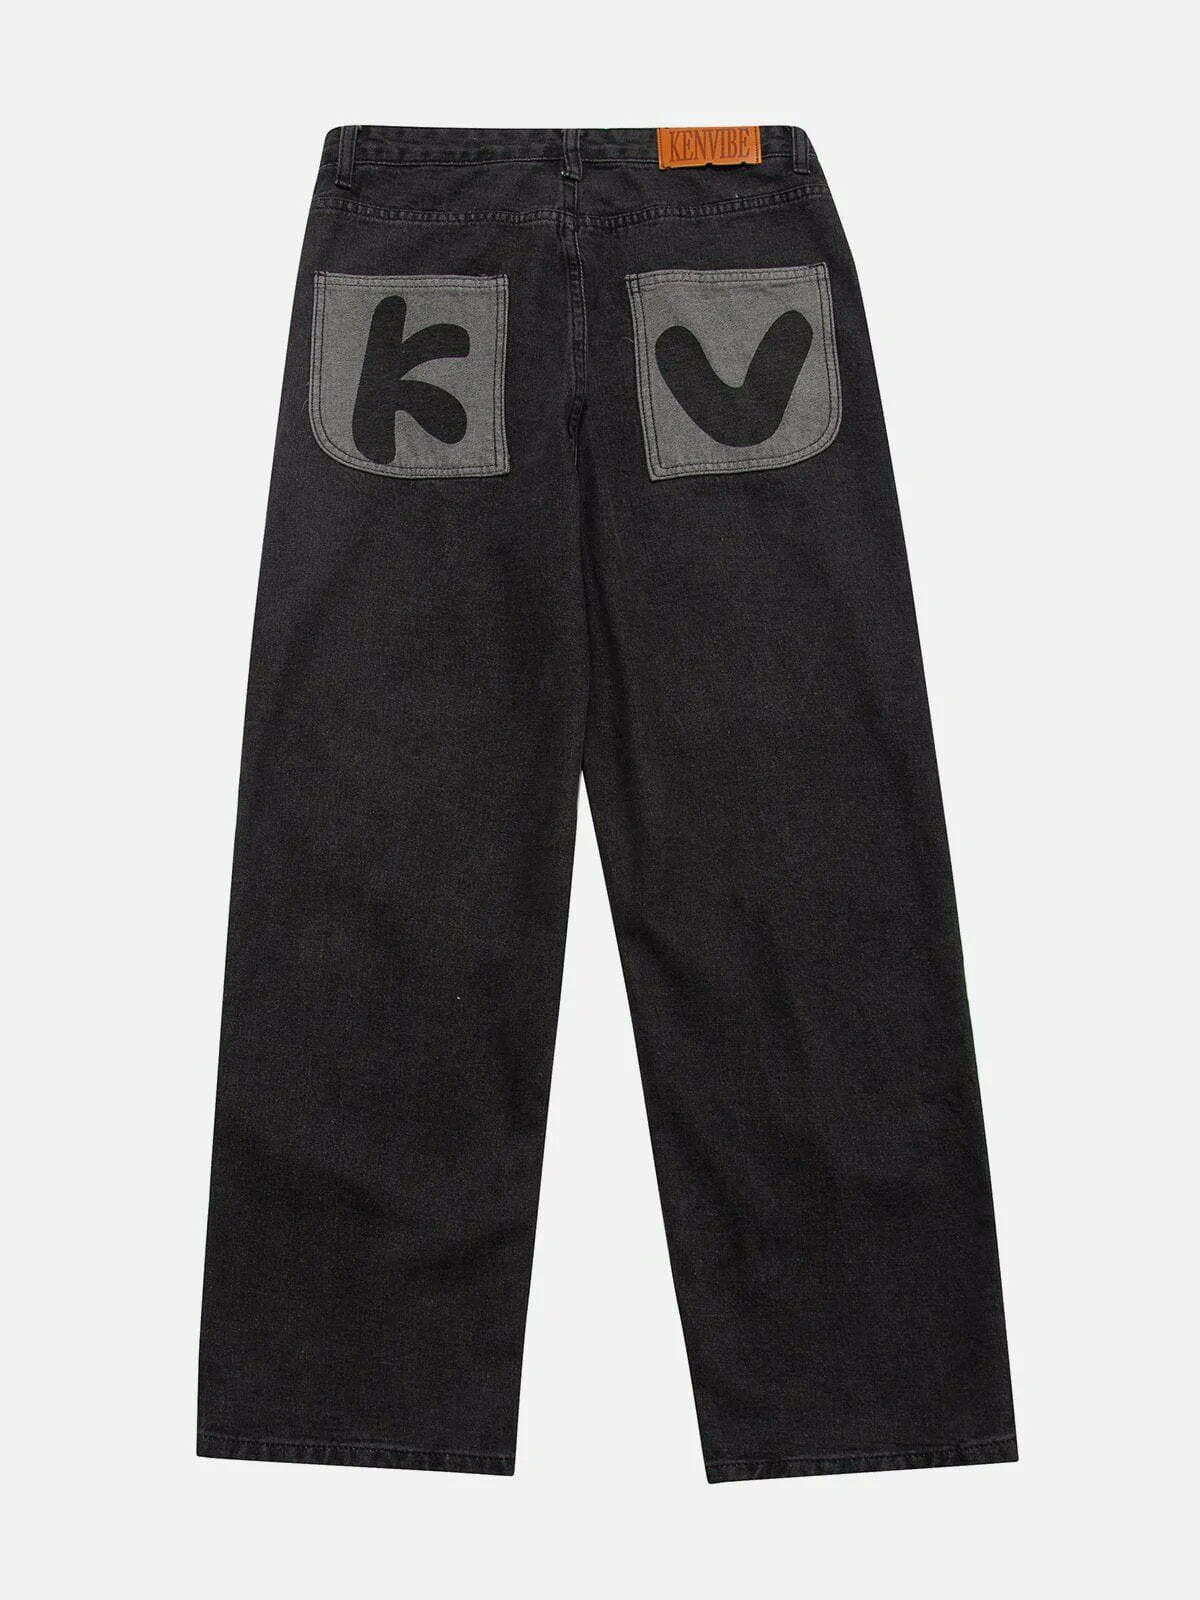 custom patchwork jeans edgy & retro streetwear 1915